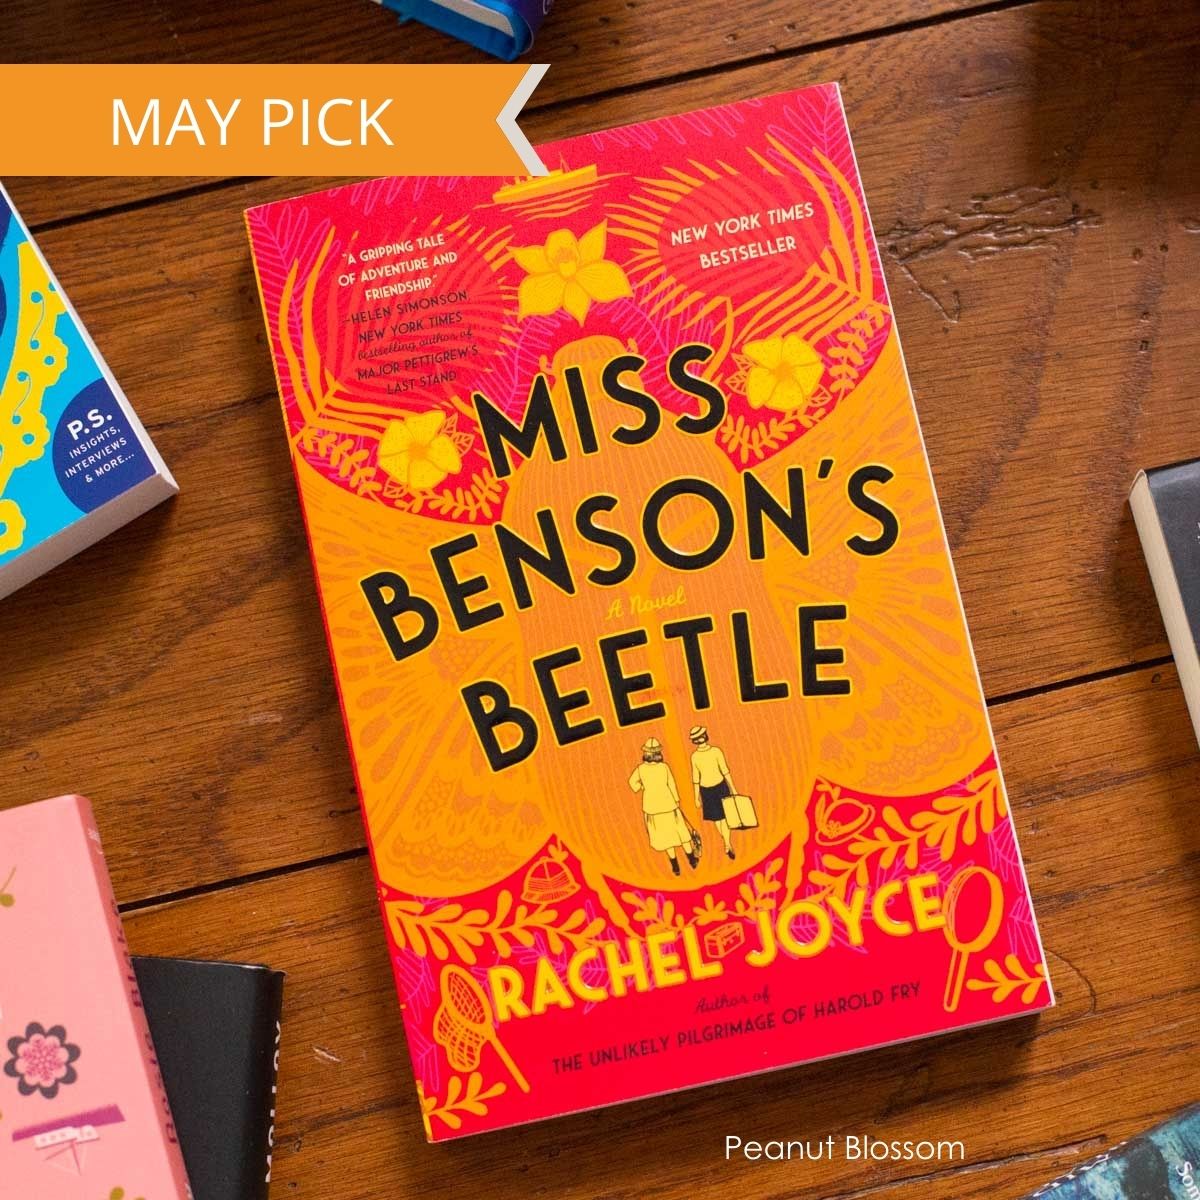 A copy of Miss Benson's Beetle by Rachel Joyce sits on a table.